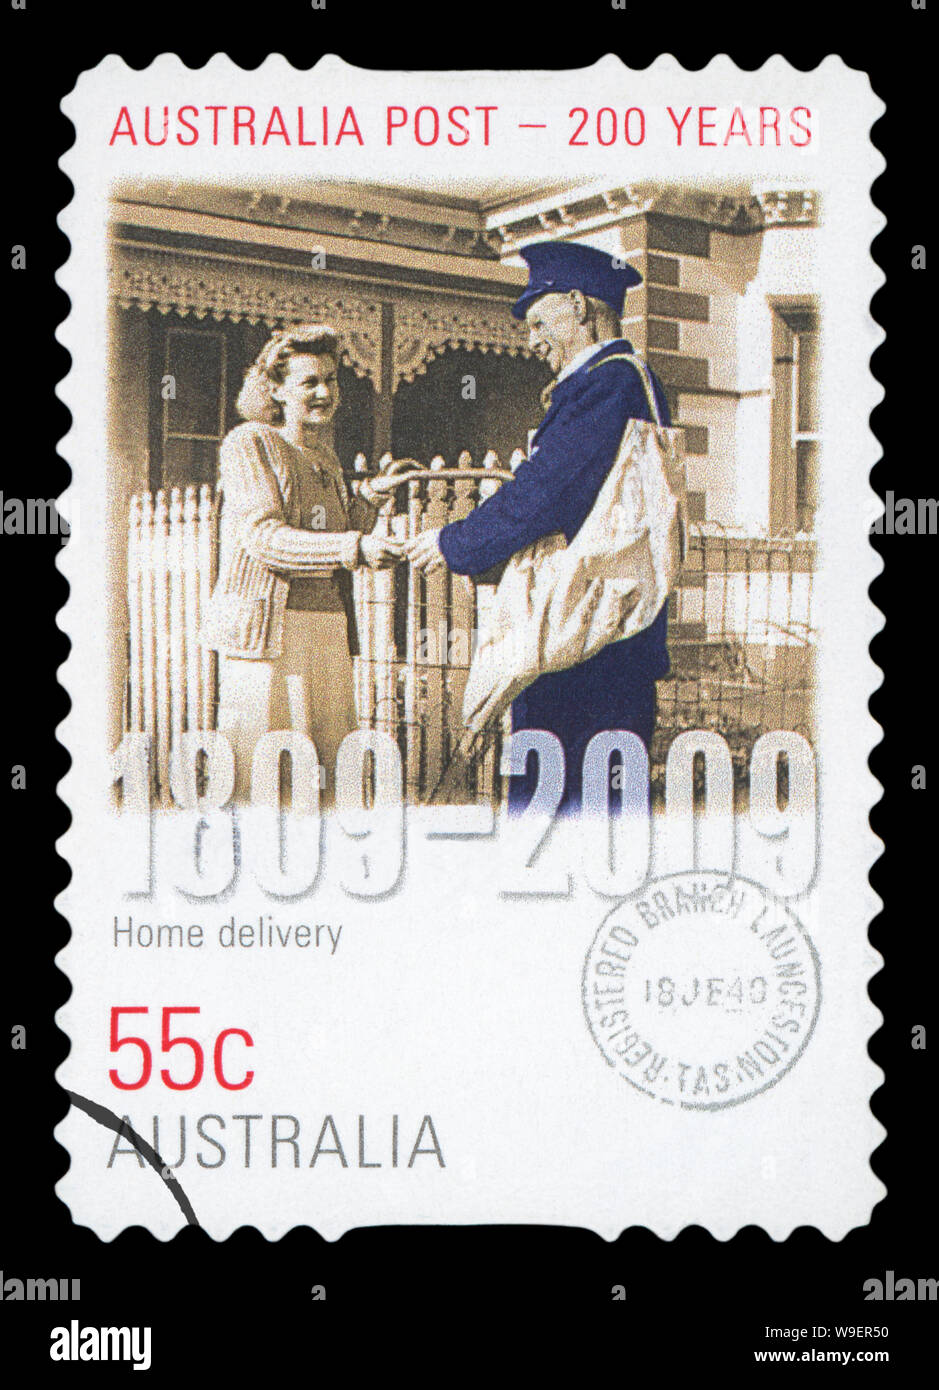 AUSTRALIA - CIRCA 2009 : an Australian postal stamp cancelled depicting Home delivery - Australia post 200 years, circa 2009. Stock Photo